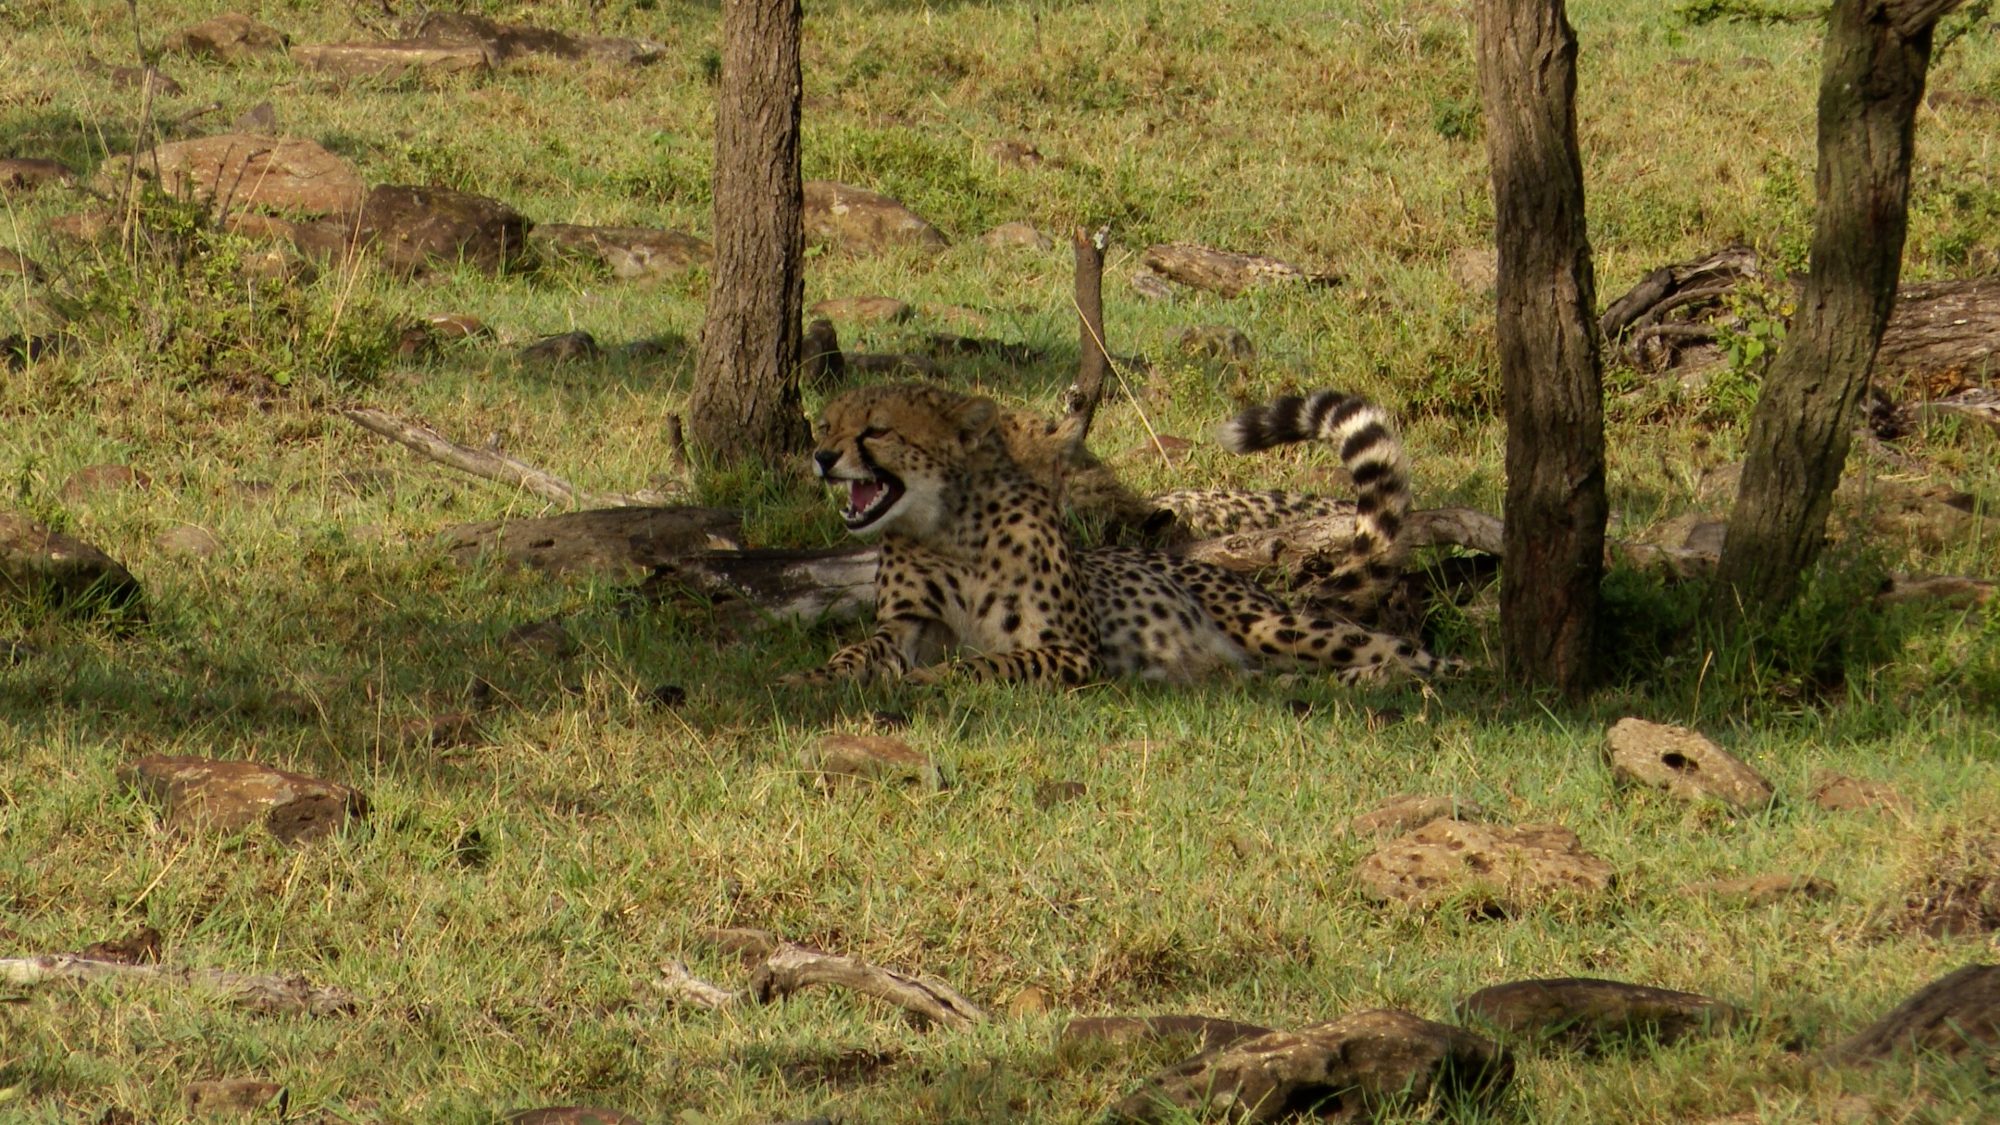 Cheetah-hyena interaction – Maasai Mara 2019